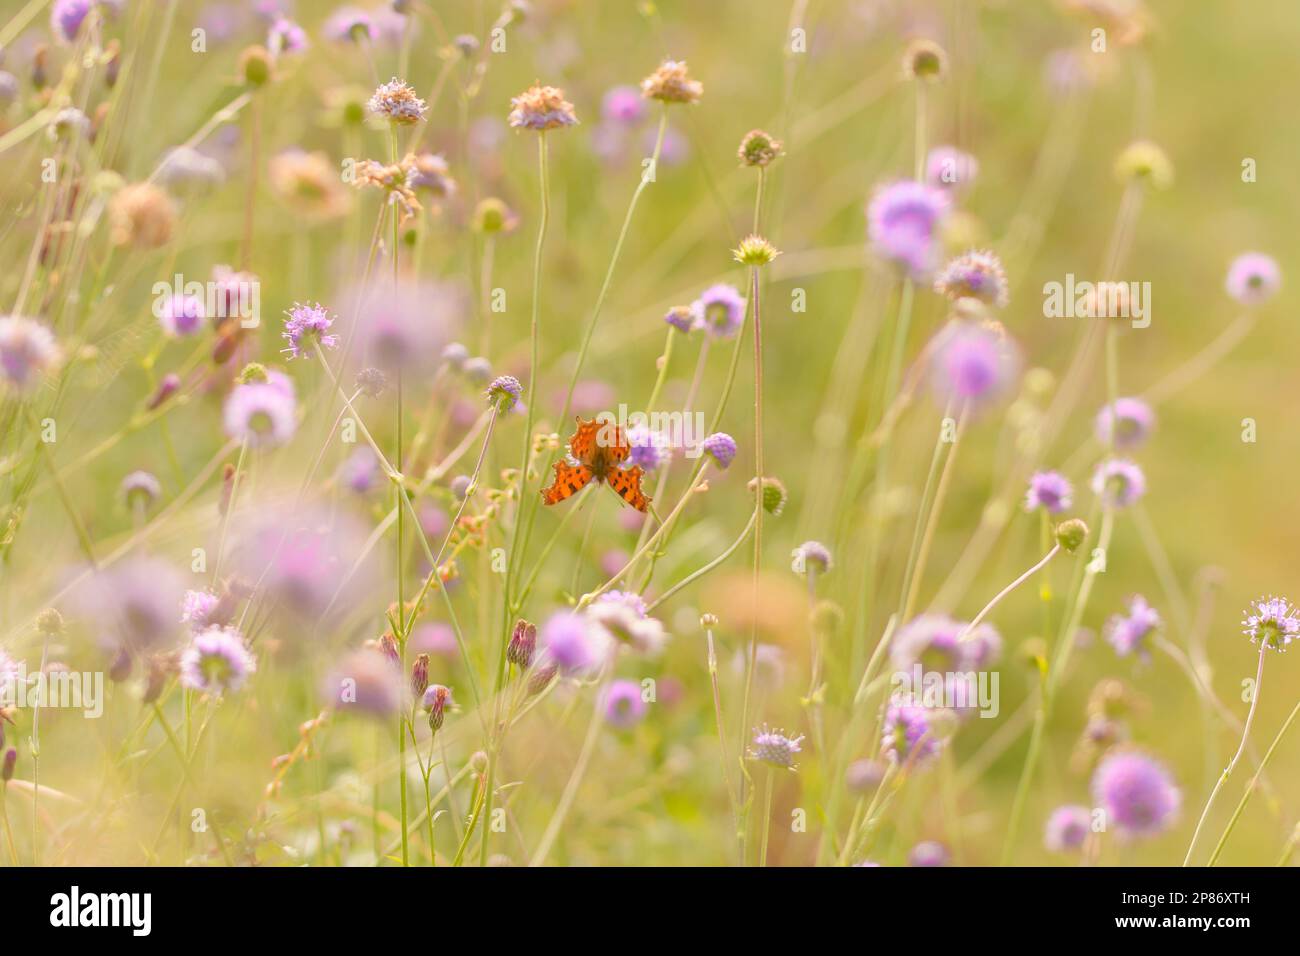 Comma butterfly in a wildflower meadow Stock Photo